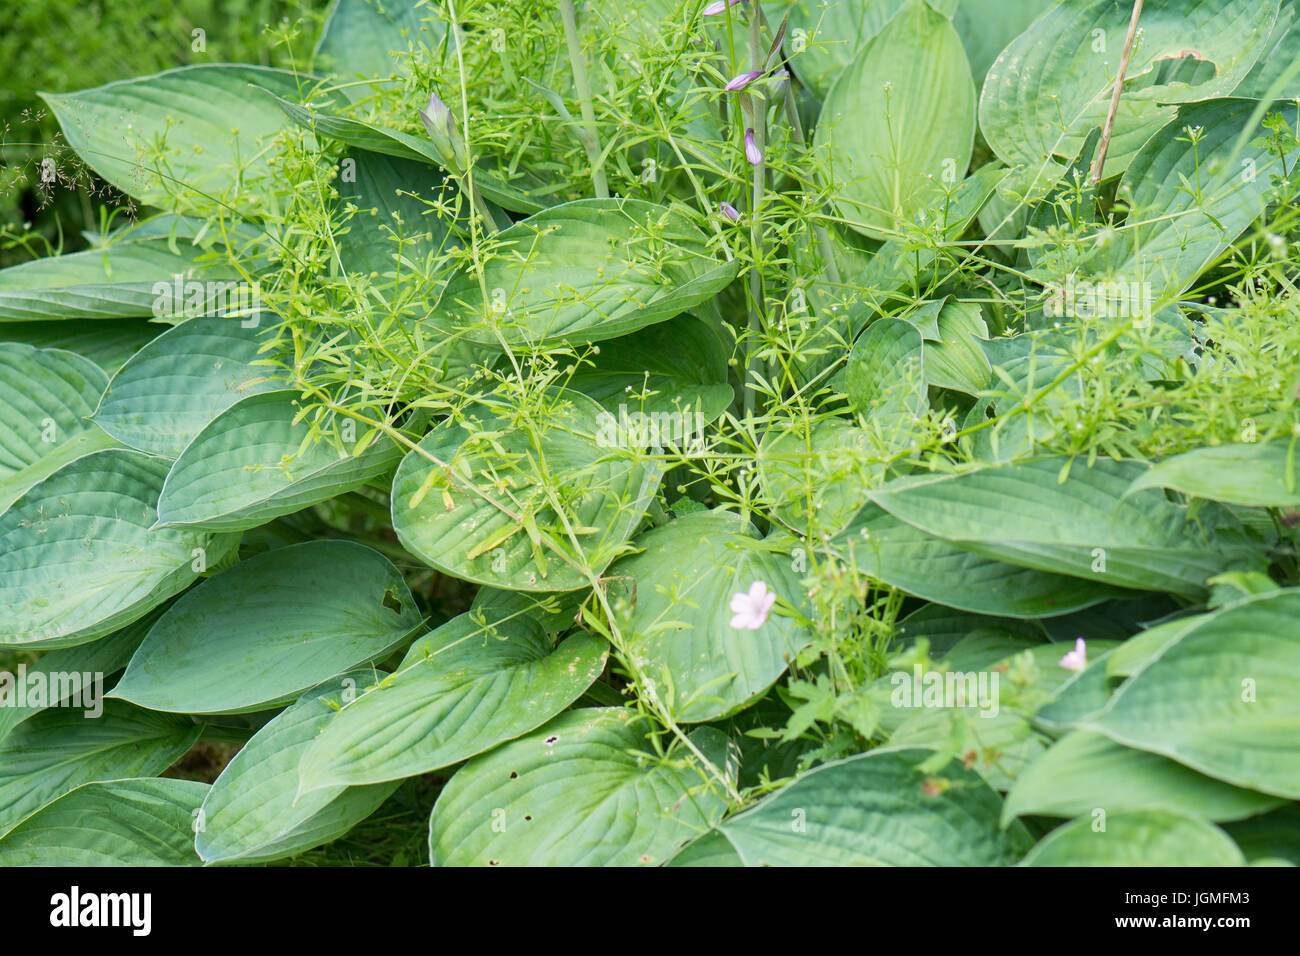 Garden weeds - cleavers Galium aparine - growing over hosta plant Stock Photo